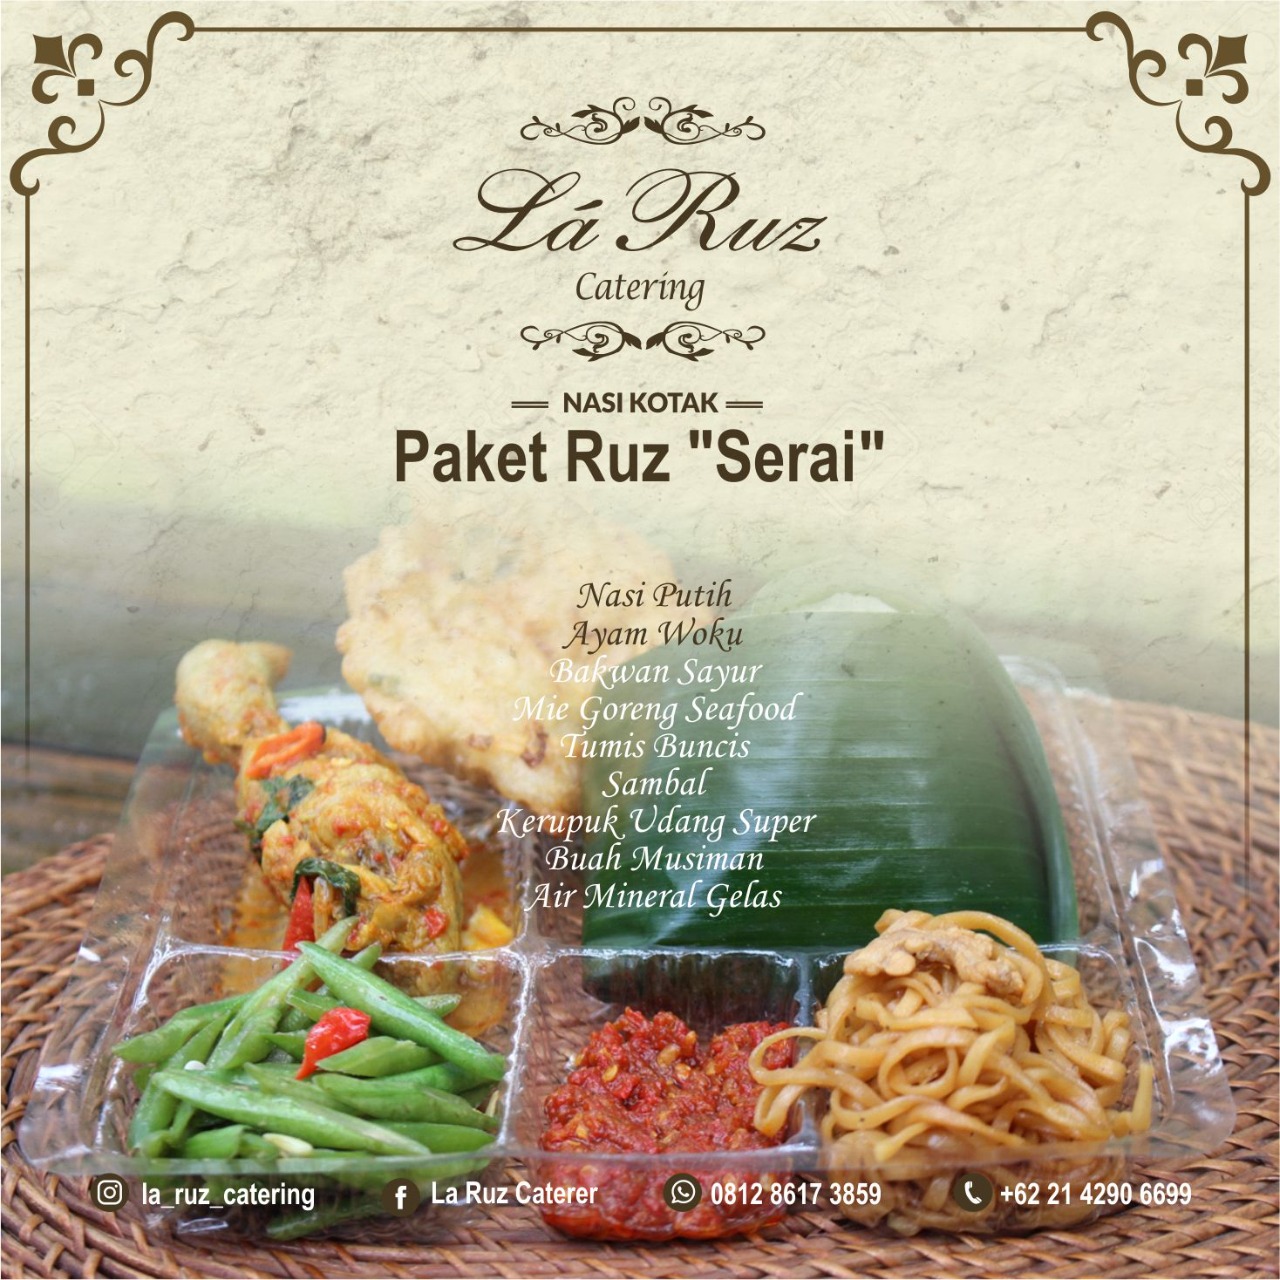 Paket Ruz Serai by La Ruz Catering